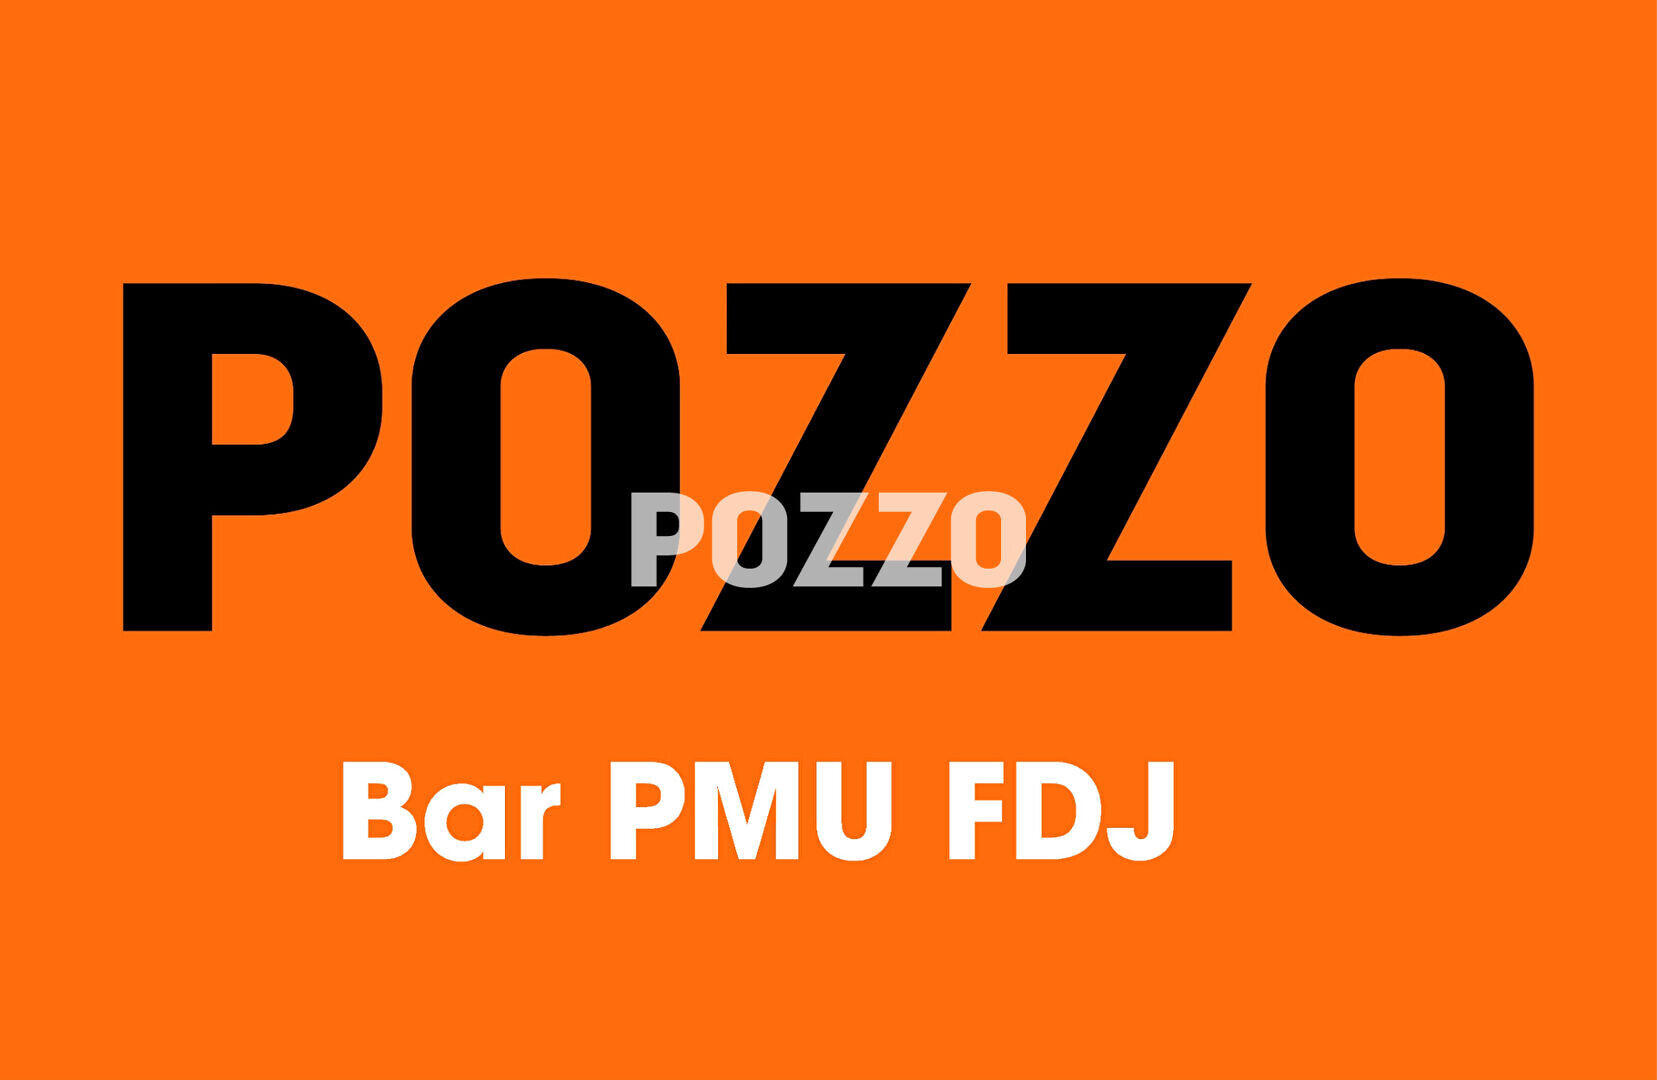 A vendre bar PMU FDJ licence IV en Manche